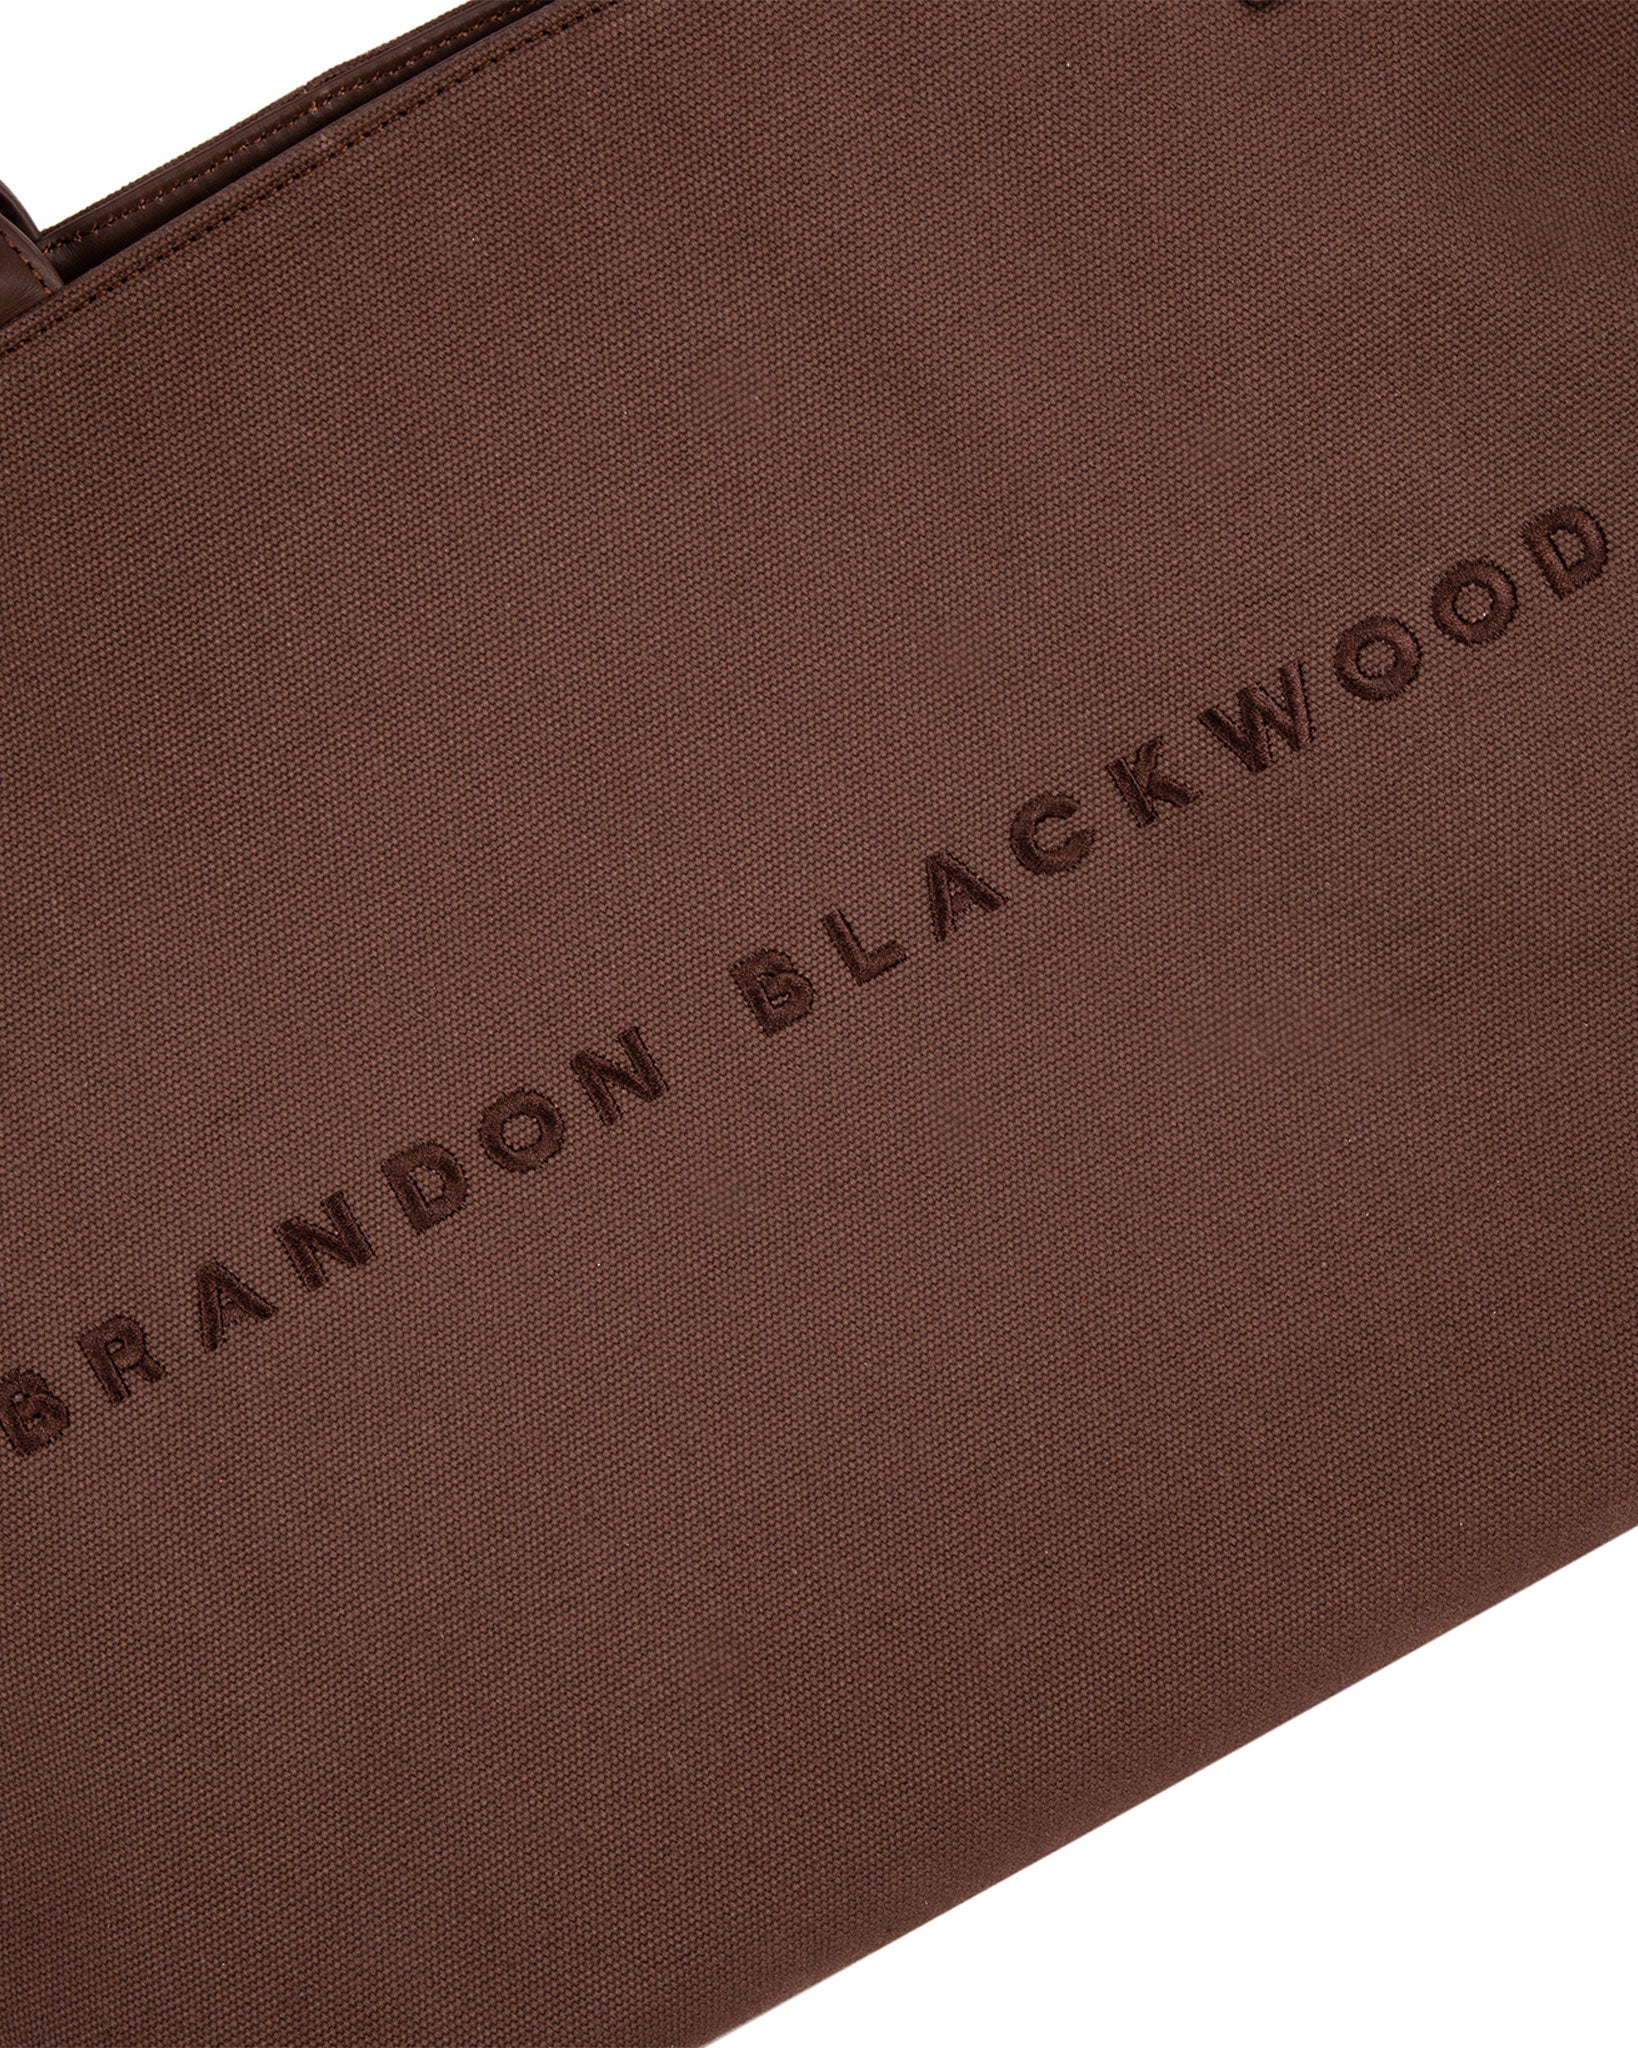 Brandon Blackwood New York - Everyday Tote - Brown Canvas